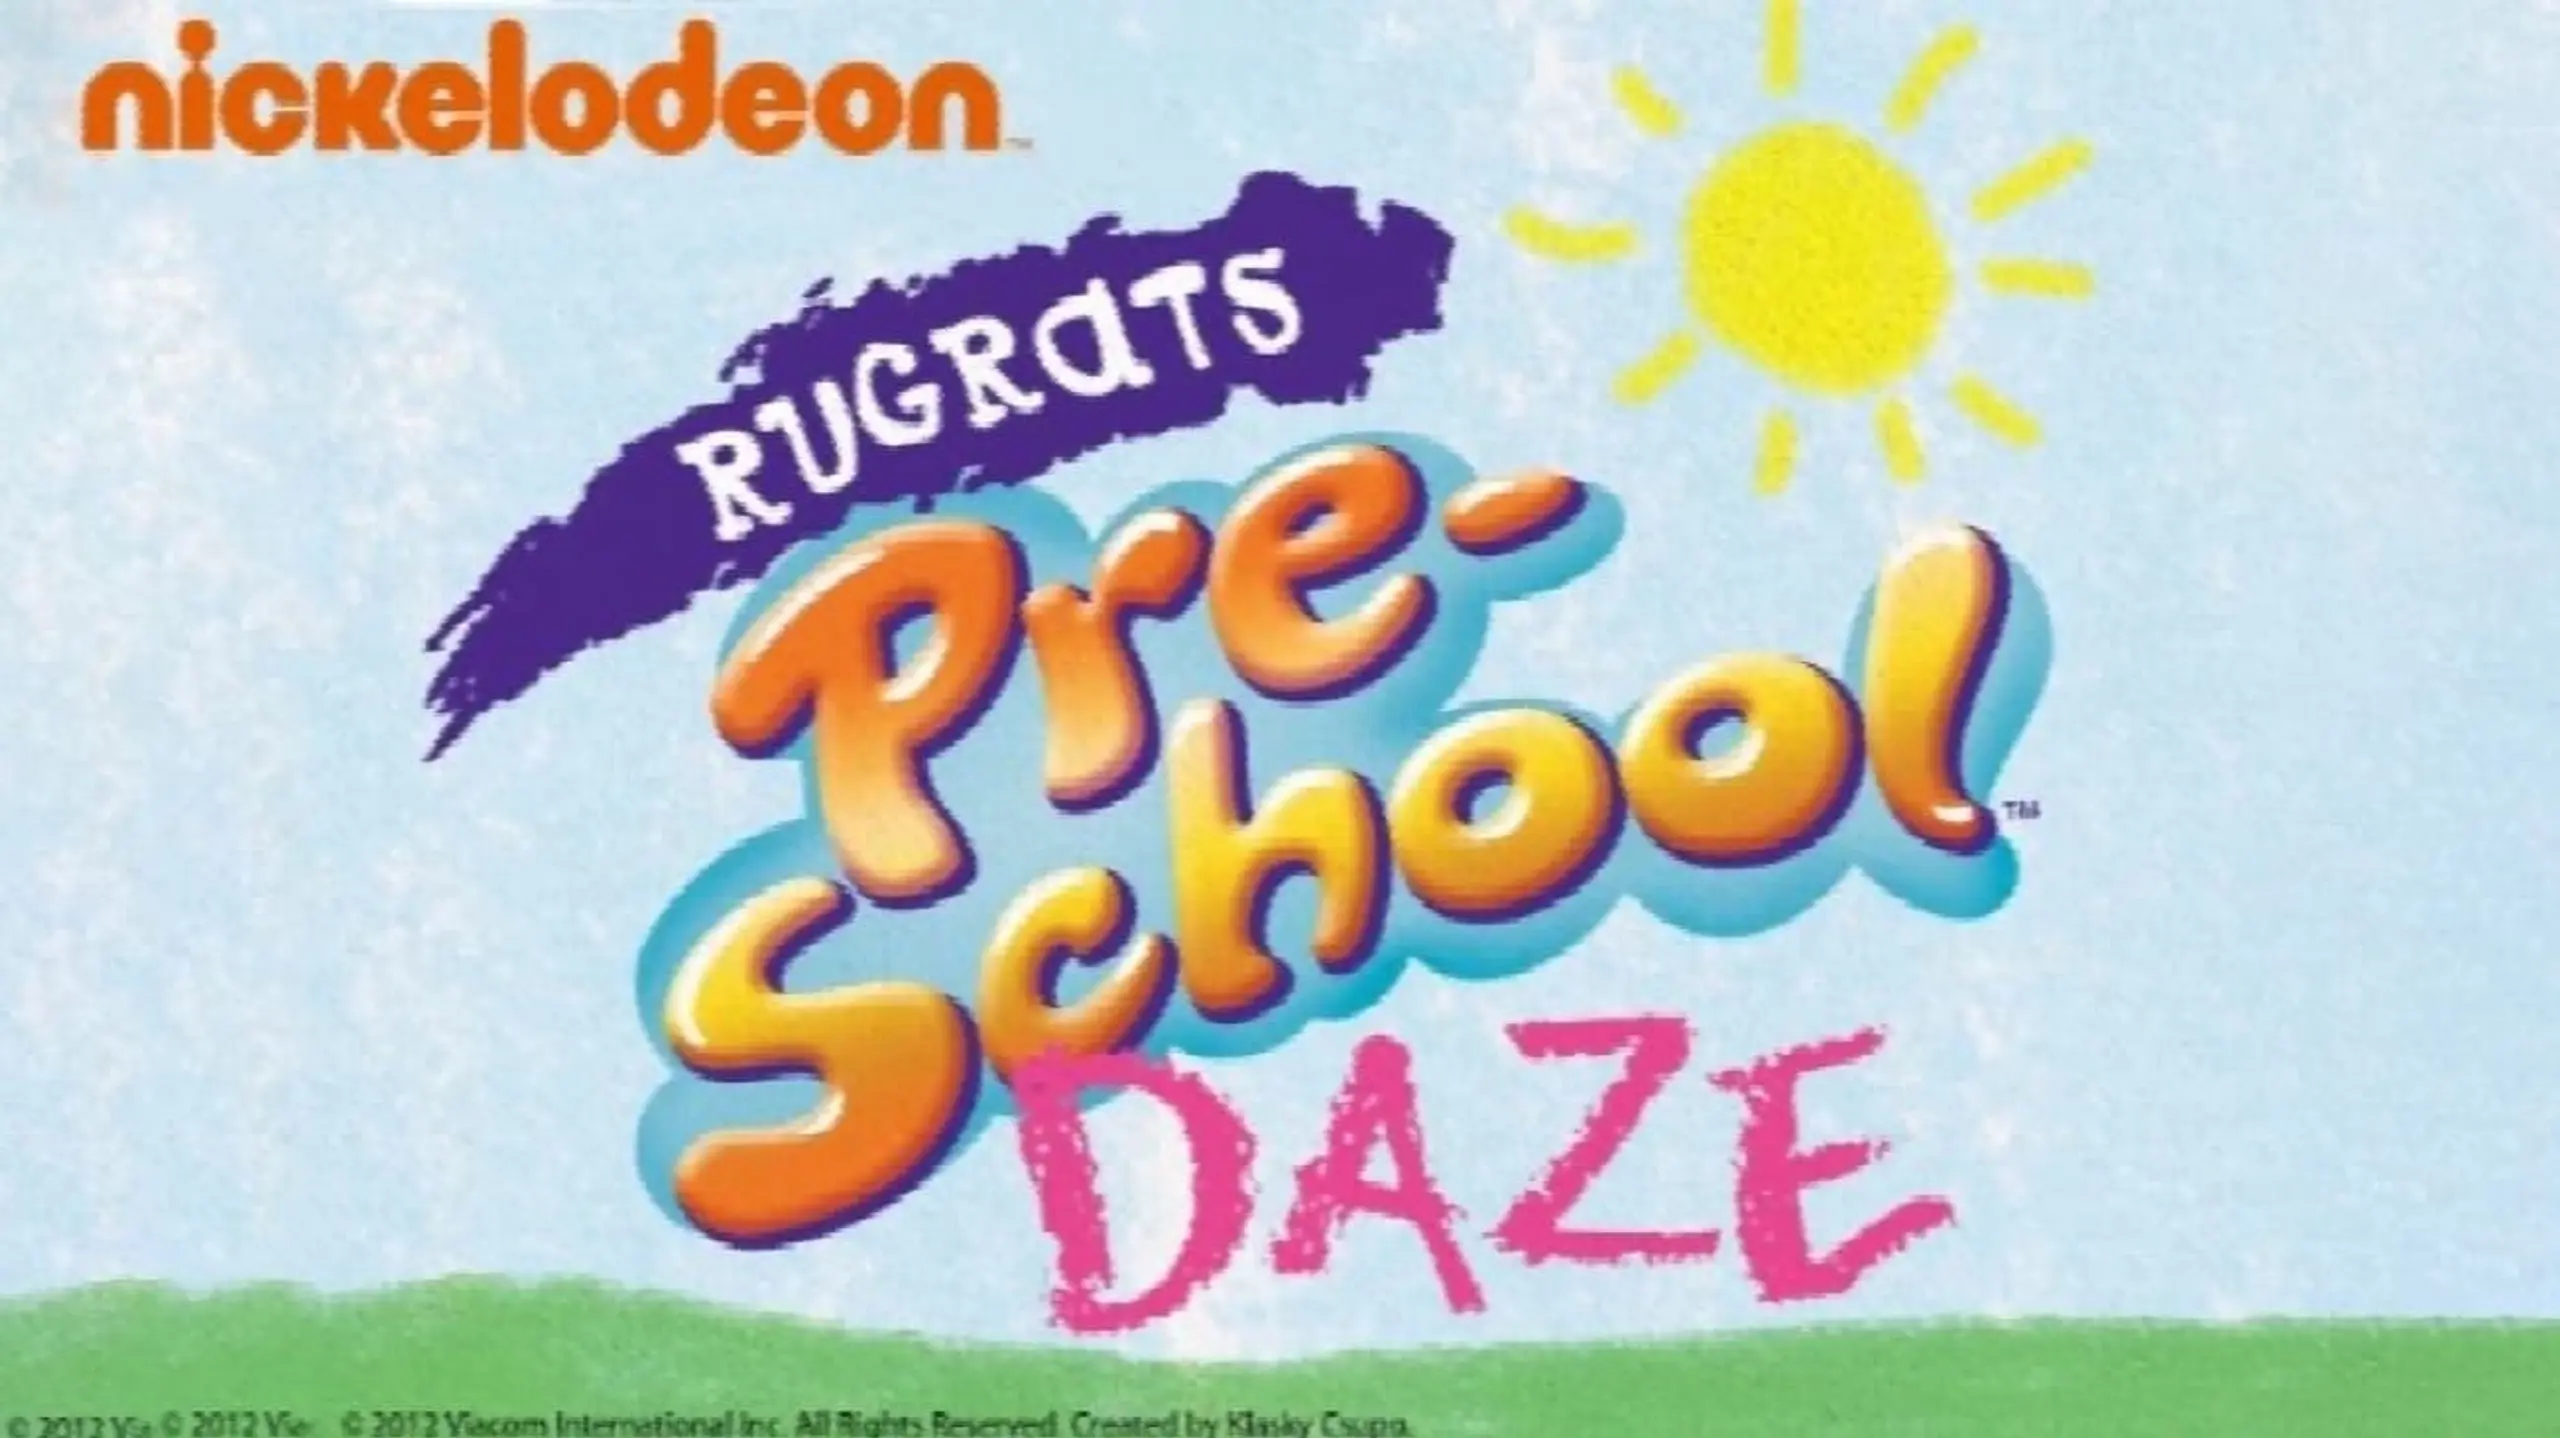 Rugrats Pre-School Daze